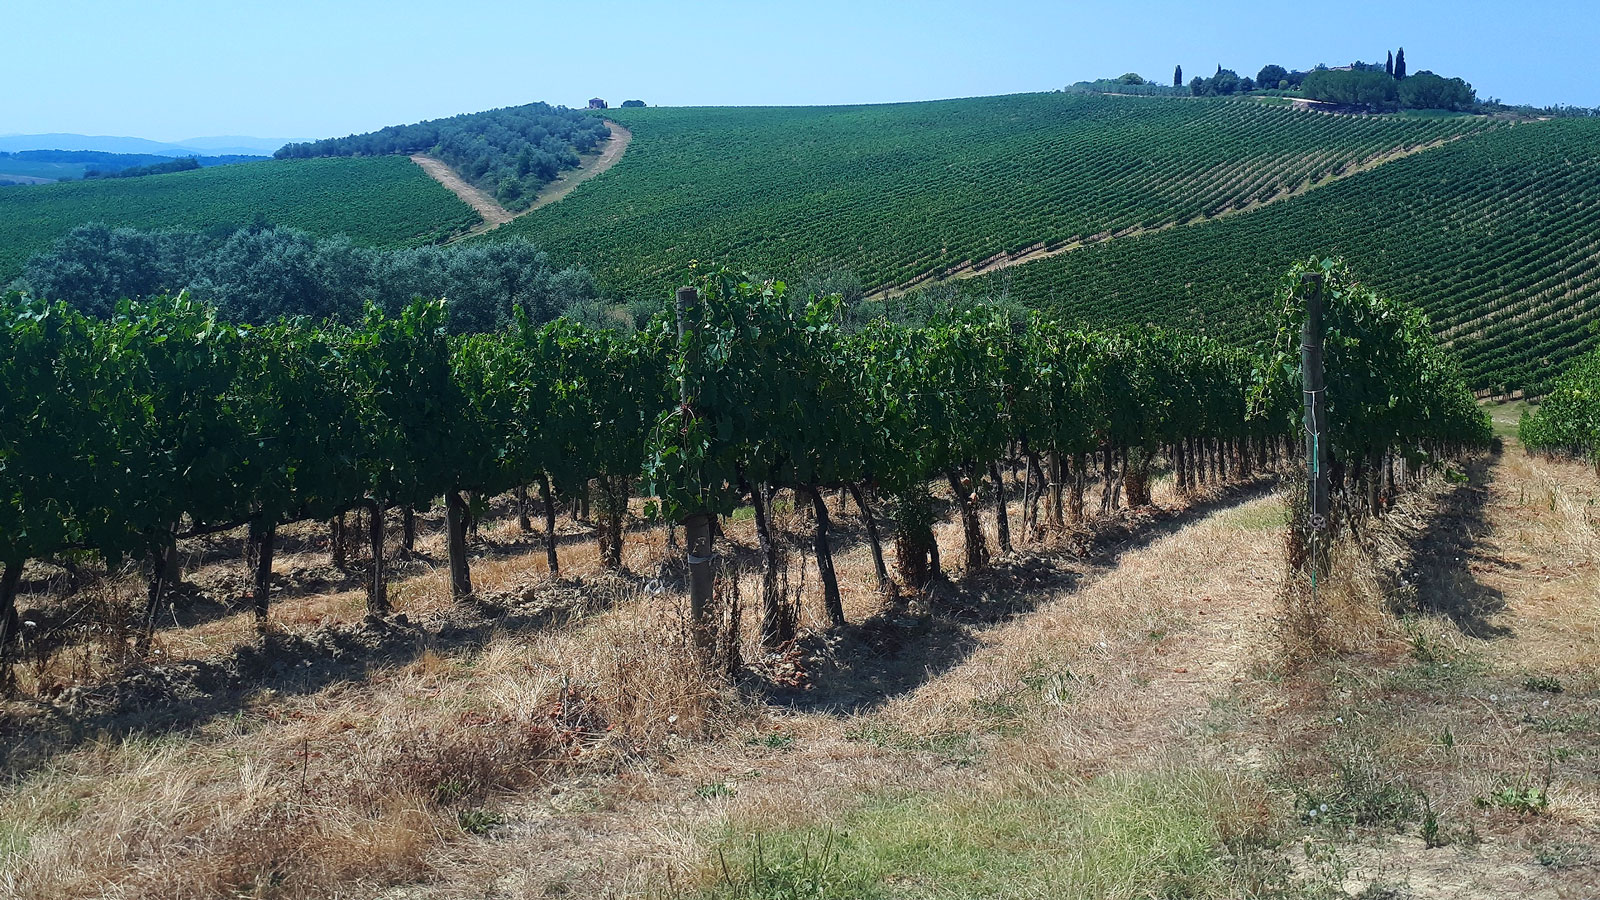 Italian vineyard mapped by a drone and Pix4Dmapper